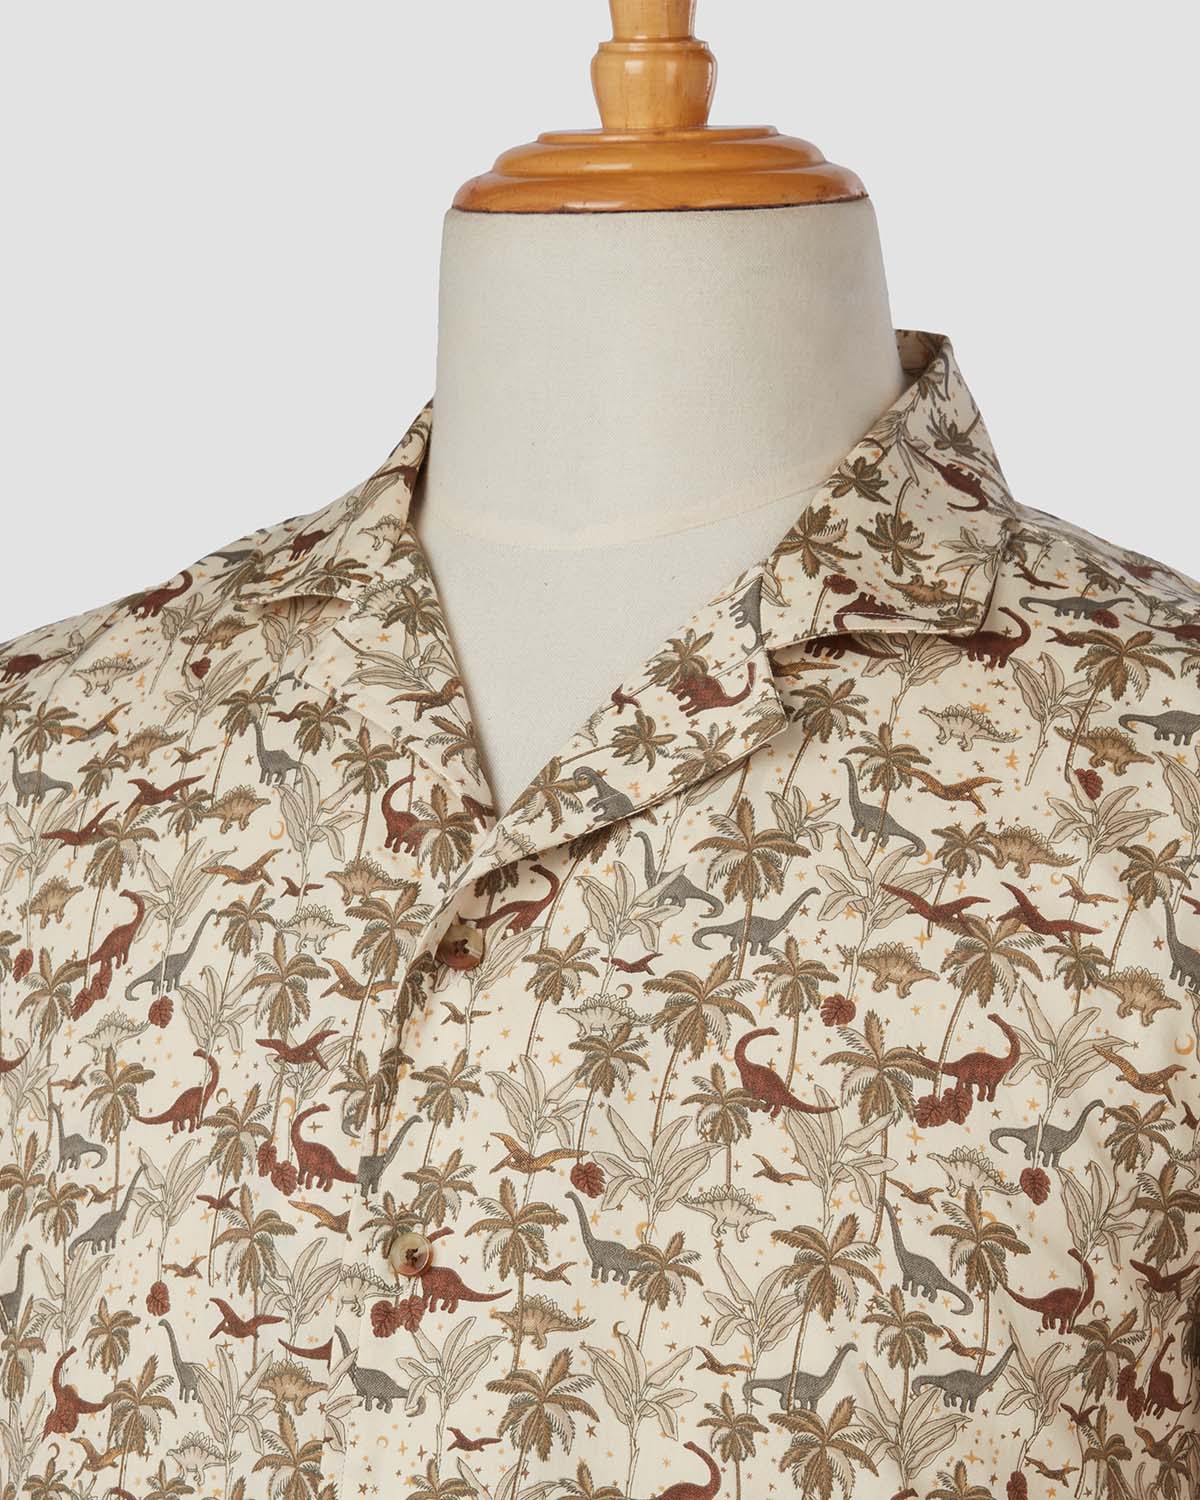 Bombay Shirt Company - Tropical Raptor Shirt